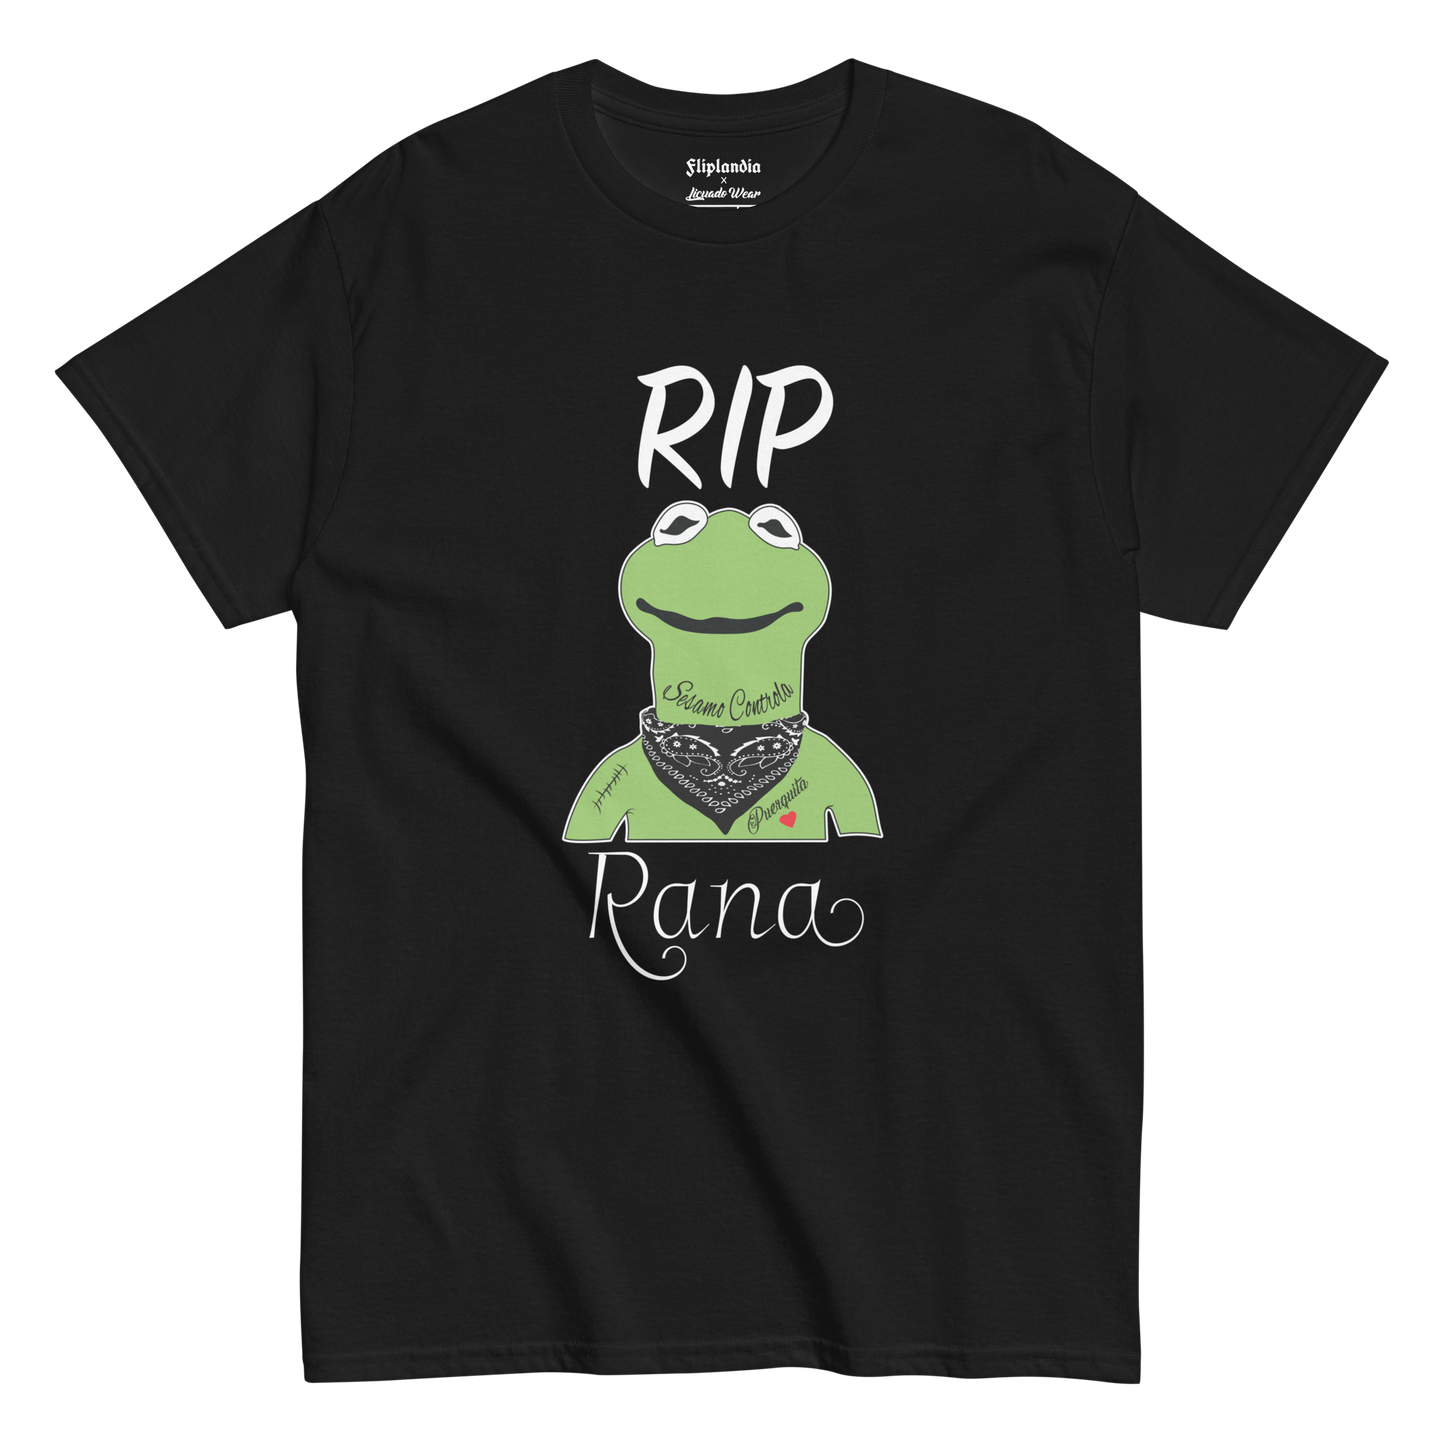 RIP Rana - Fliplandia Unisex T-shirt